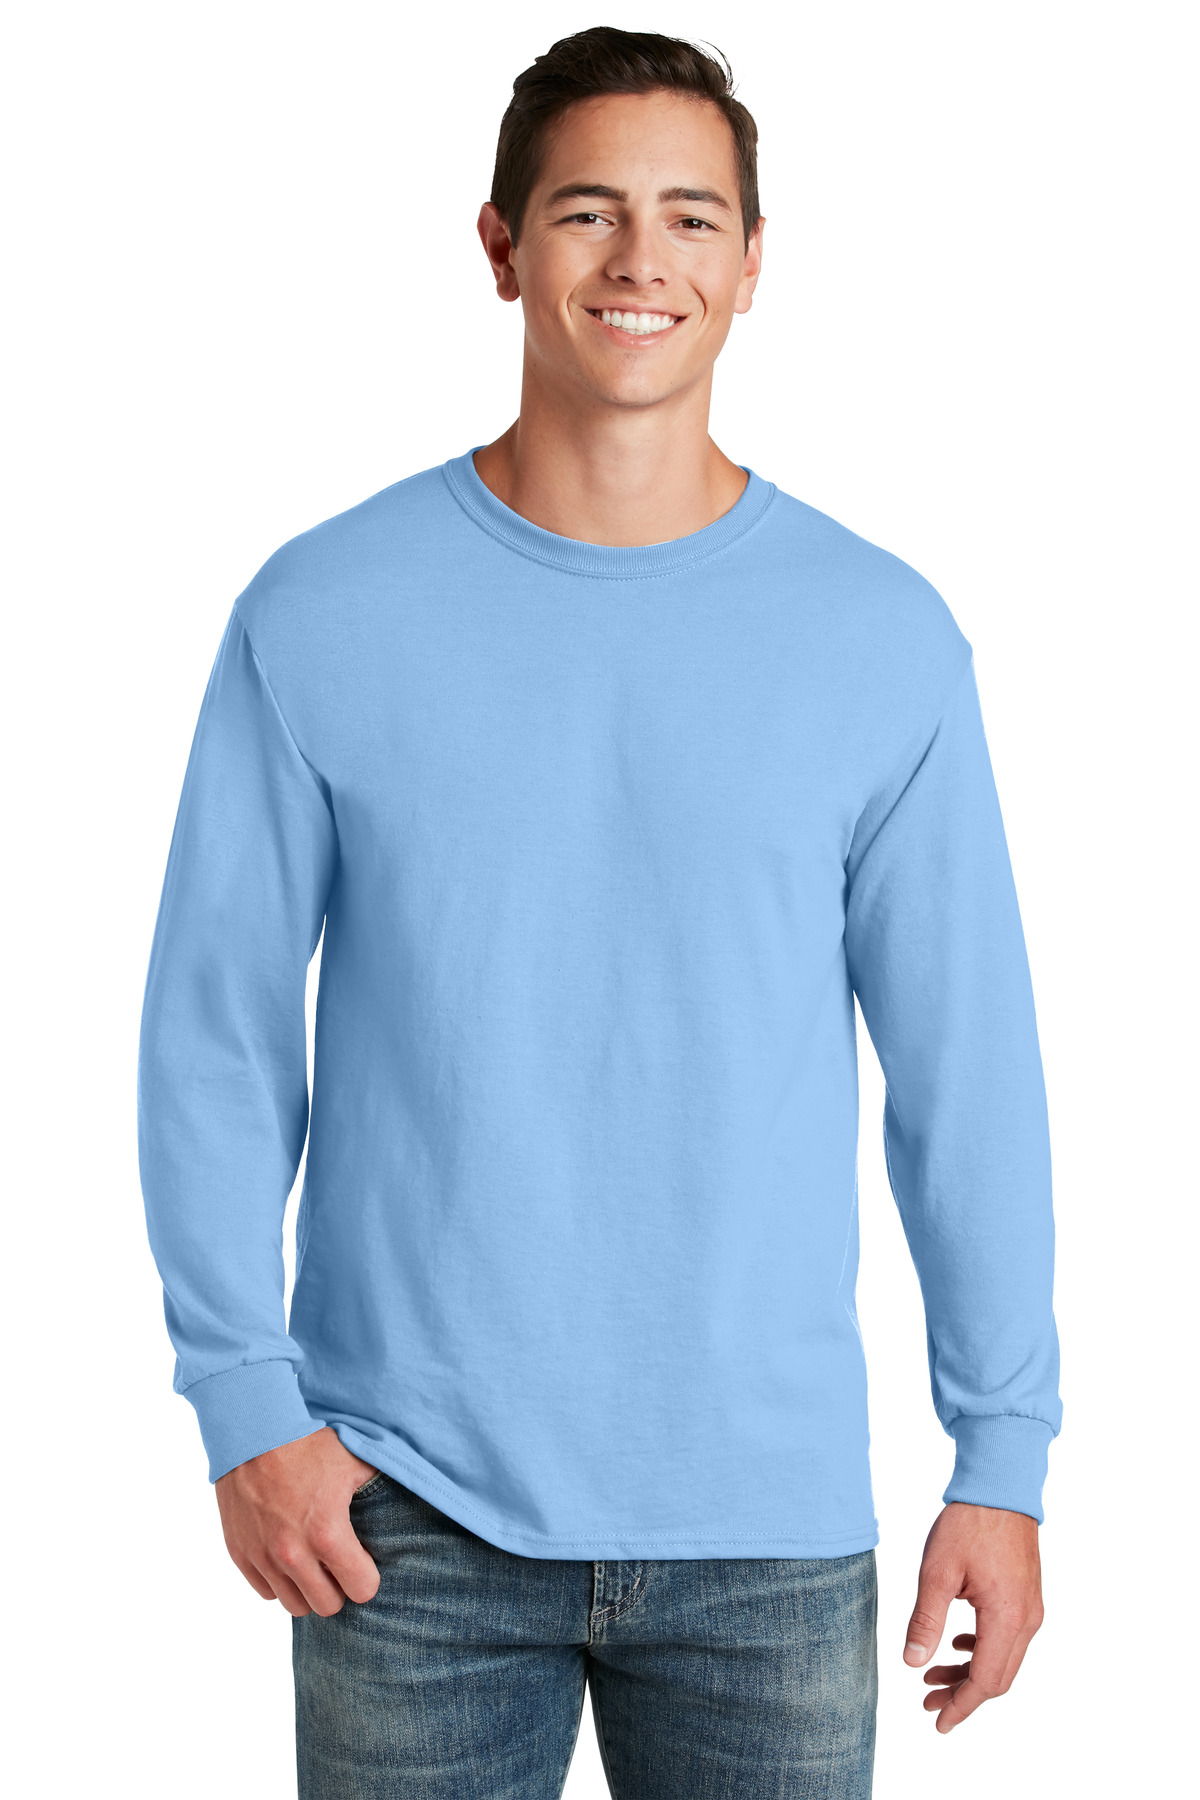 JERZEES - Dri-Power 50/50 Cotton/Poly Long Sleeve T-Shirt.  29LS